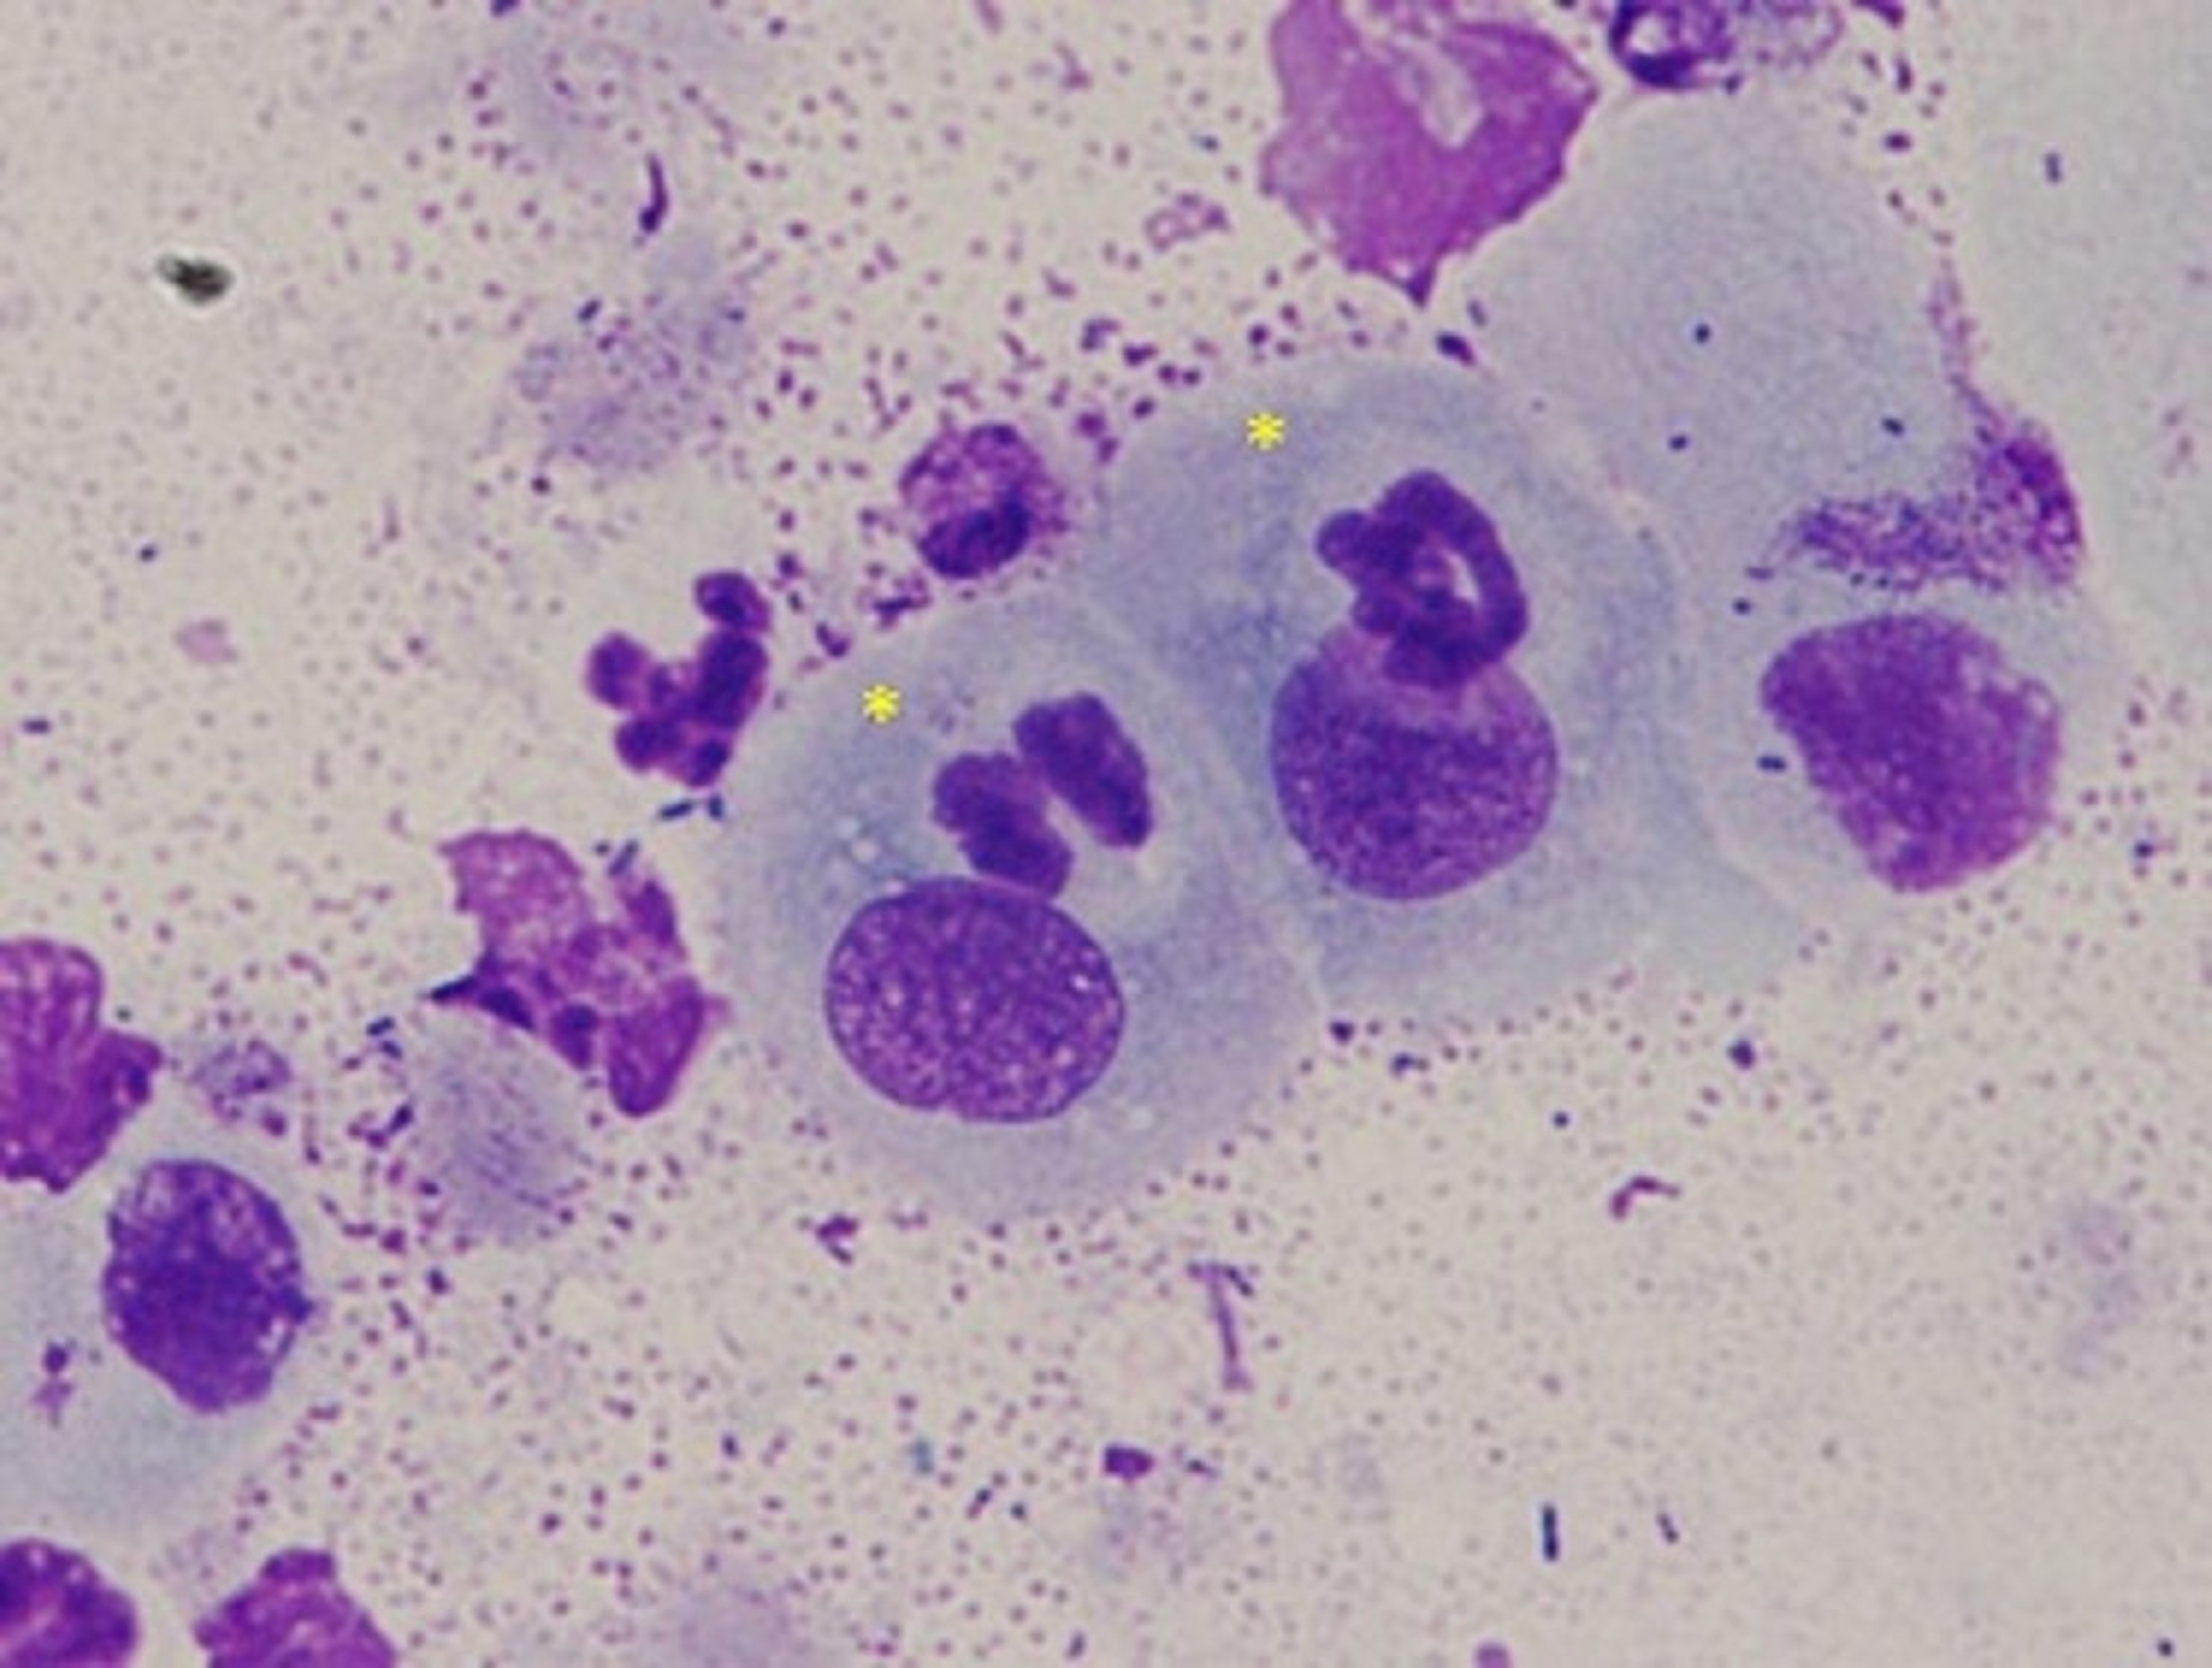 Metestrum cells, dog